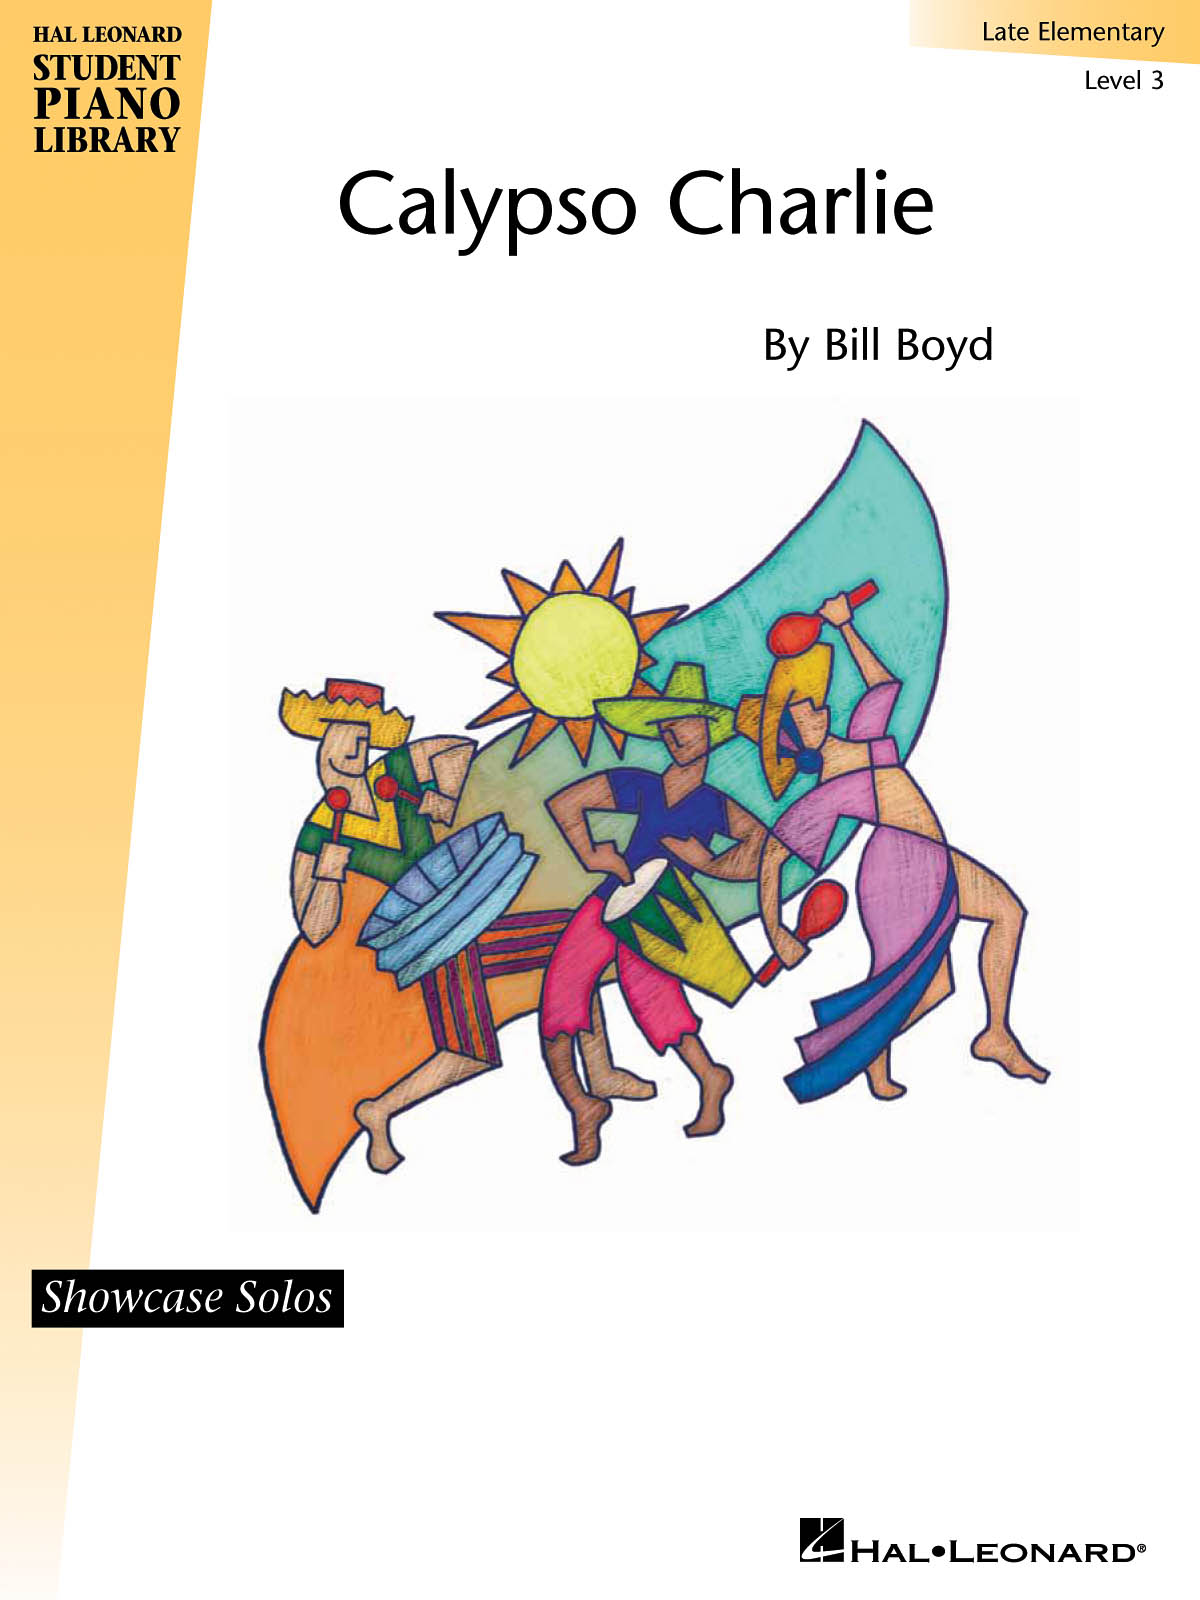 Calypso Charlie(Hal Leonard Student Piano Library Showcase Solo Level 3/Late Elementary)